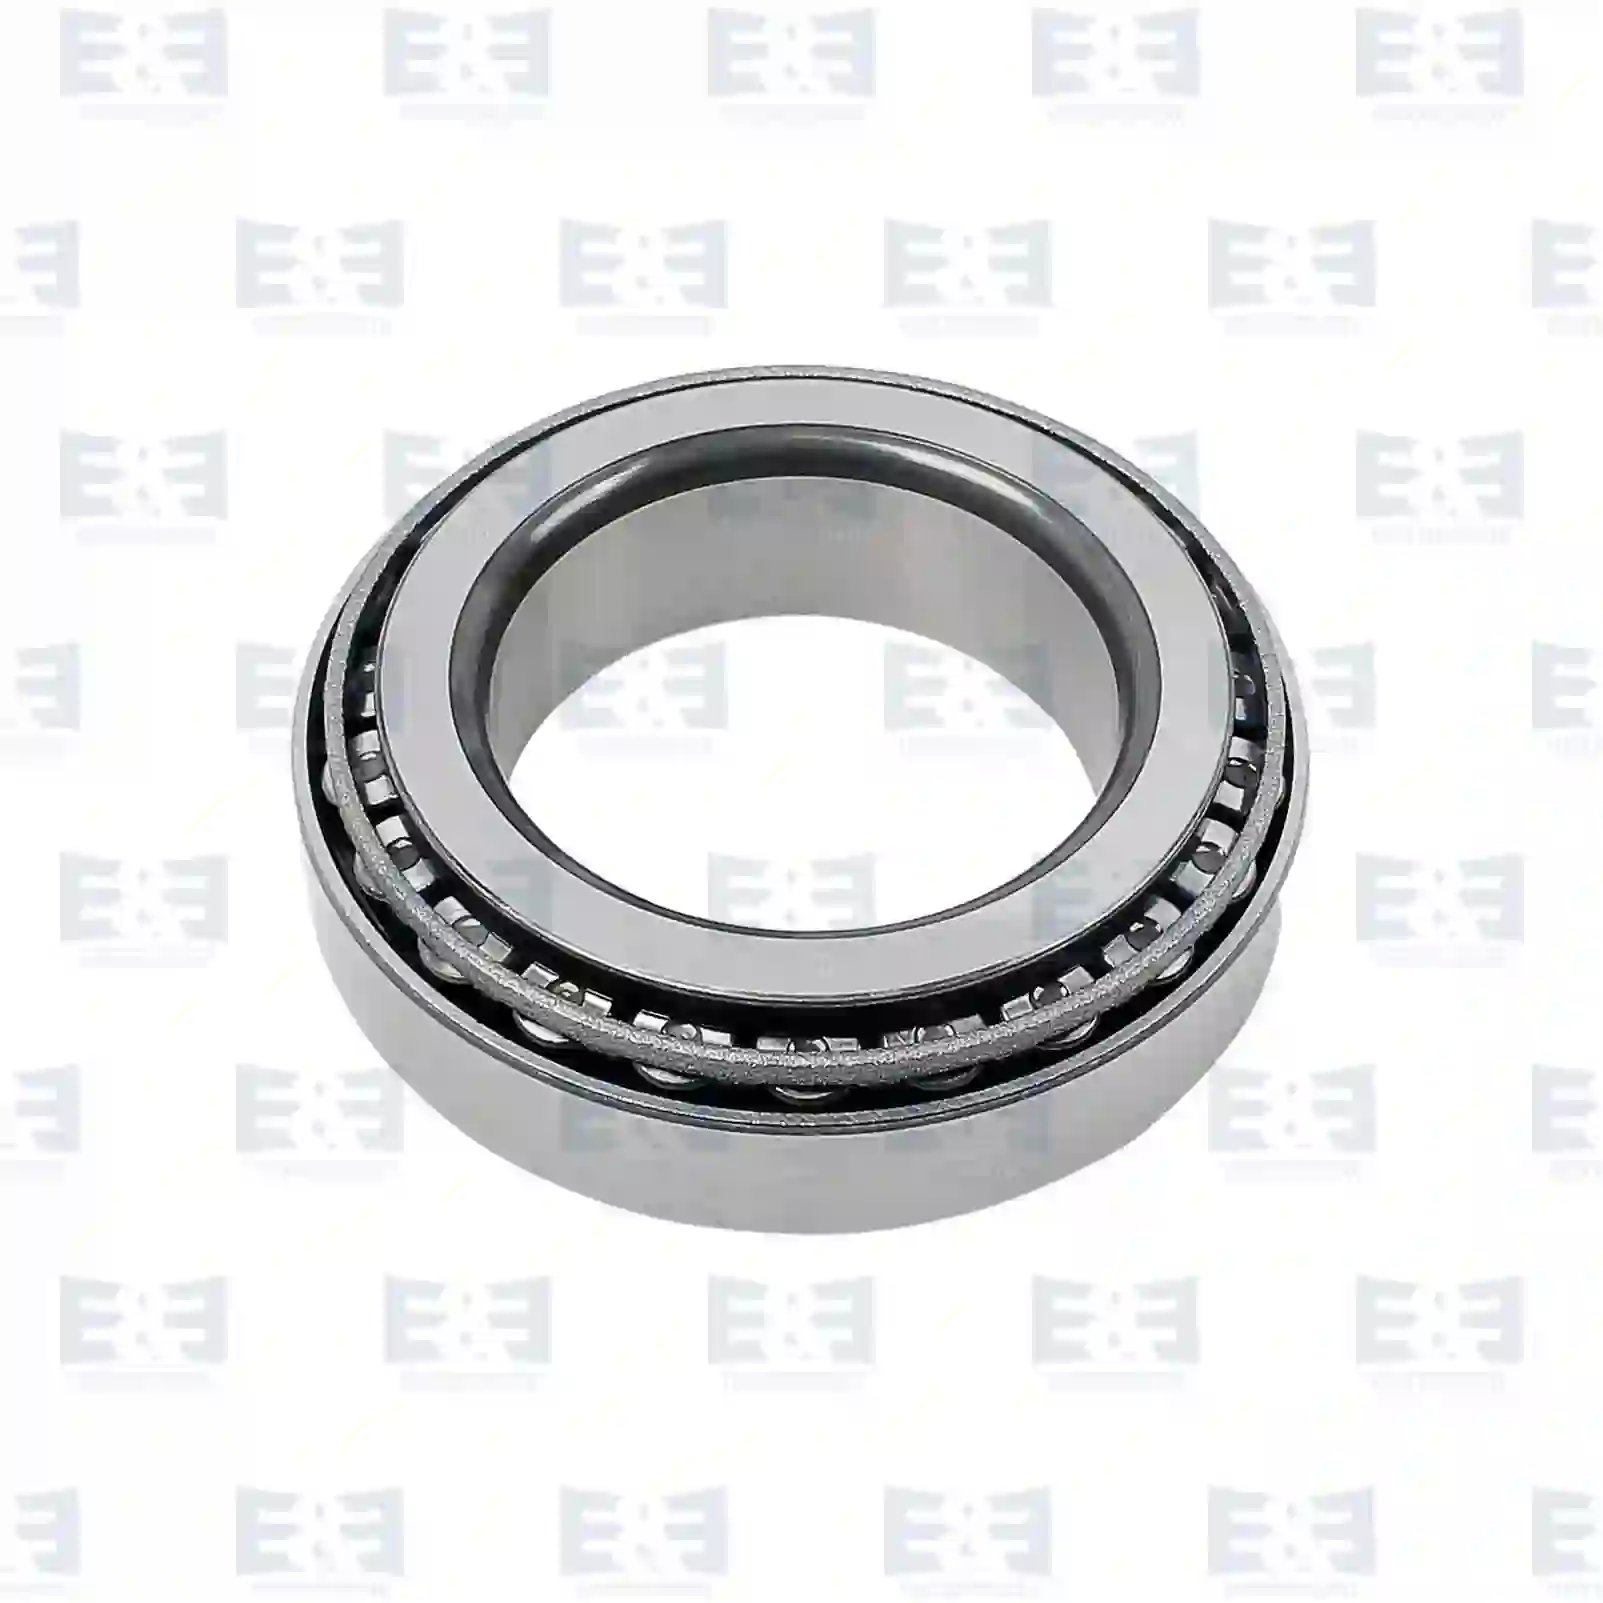 Hub Wheel bearing kit, EE No 2E2284048 ,  oem no:335024, 335030, 1300535080, 335024, 335030, ZG30183-0008 E&E Truck Spare Parts | Truck Spare Parts, Auotomotive Spare Parts